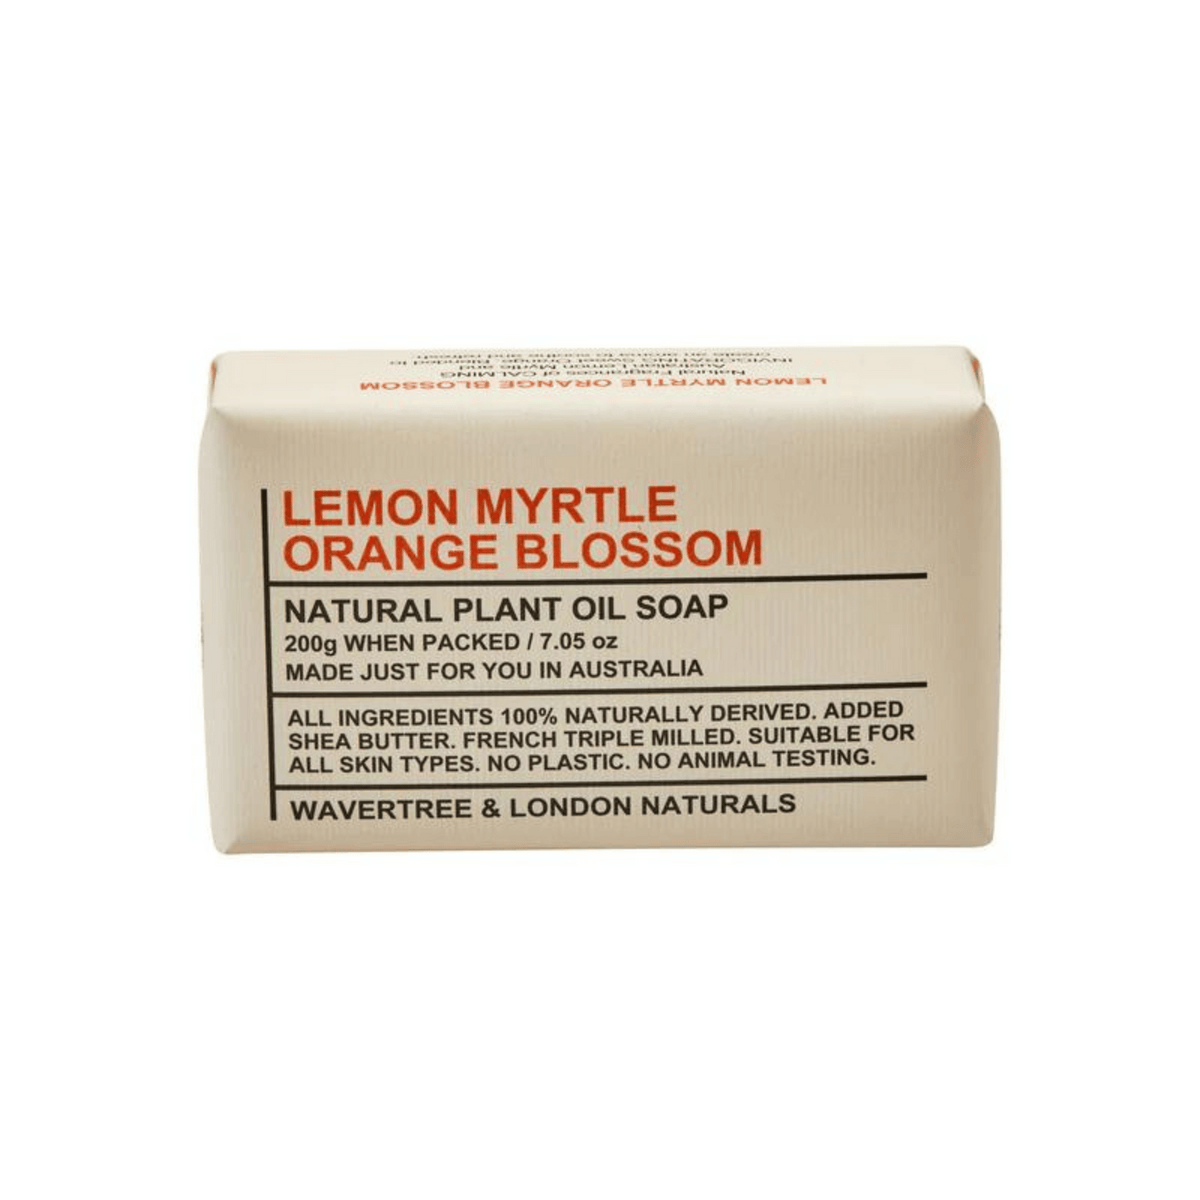 Primary Image of Lemon Myrtle and Orange Blossom Soap Bar